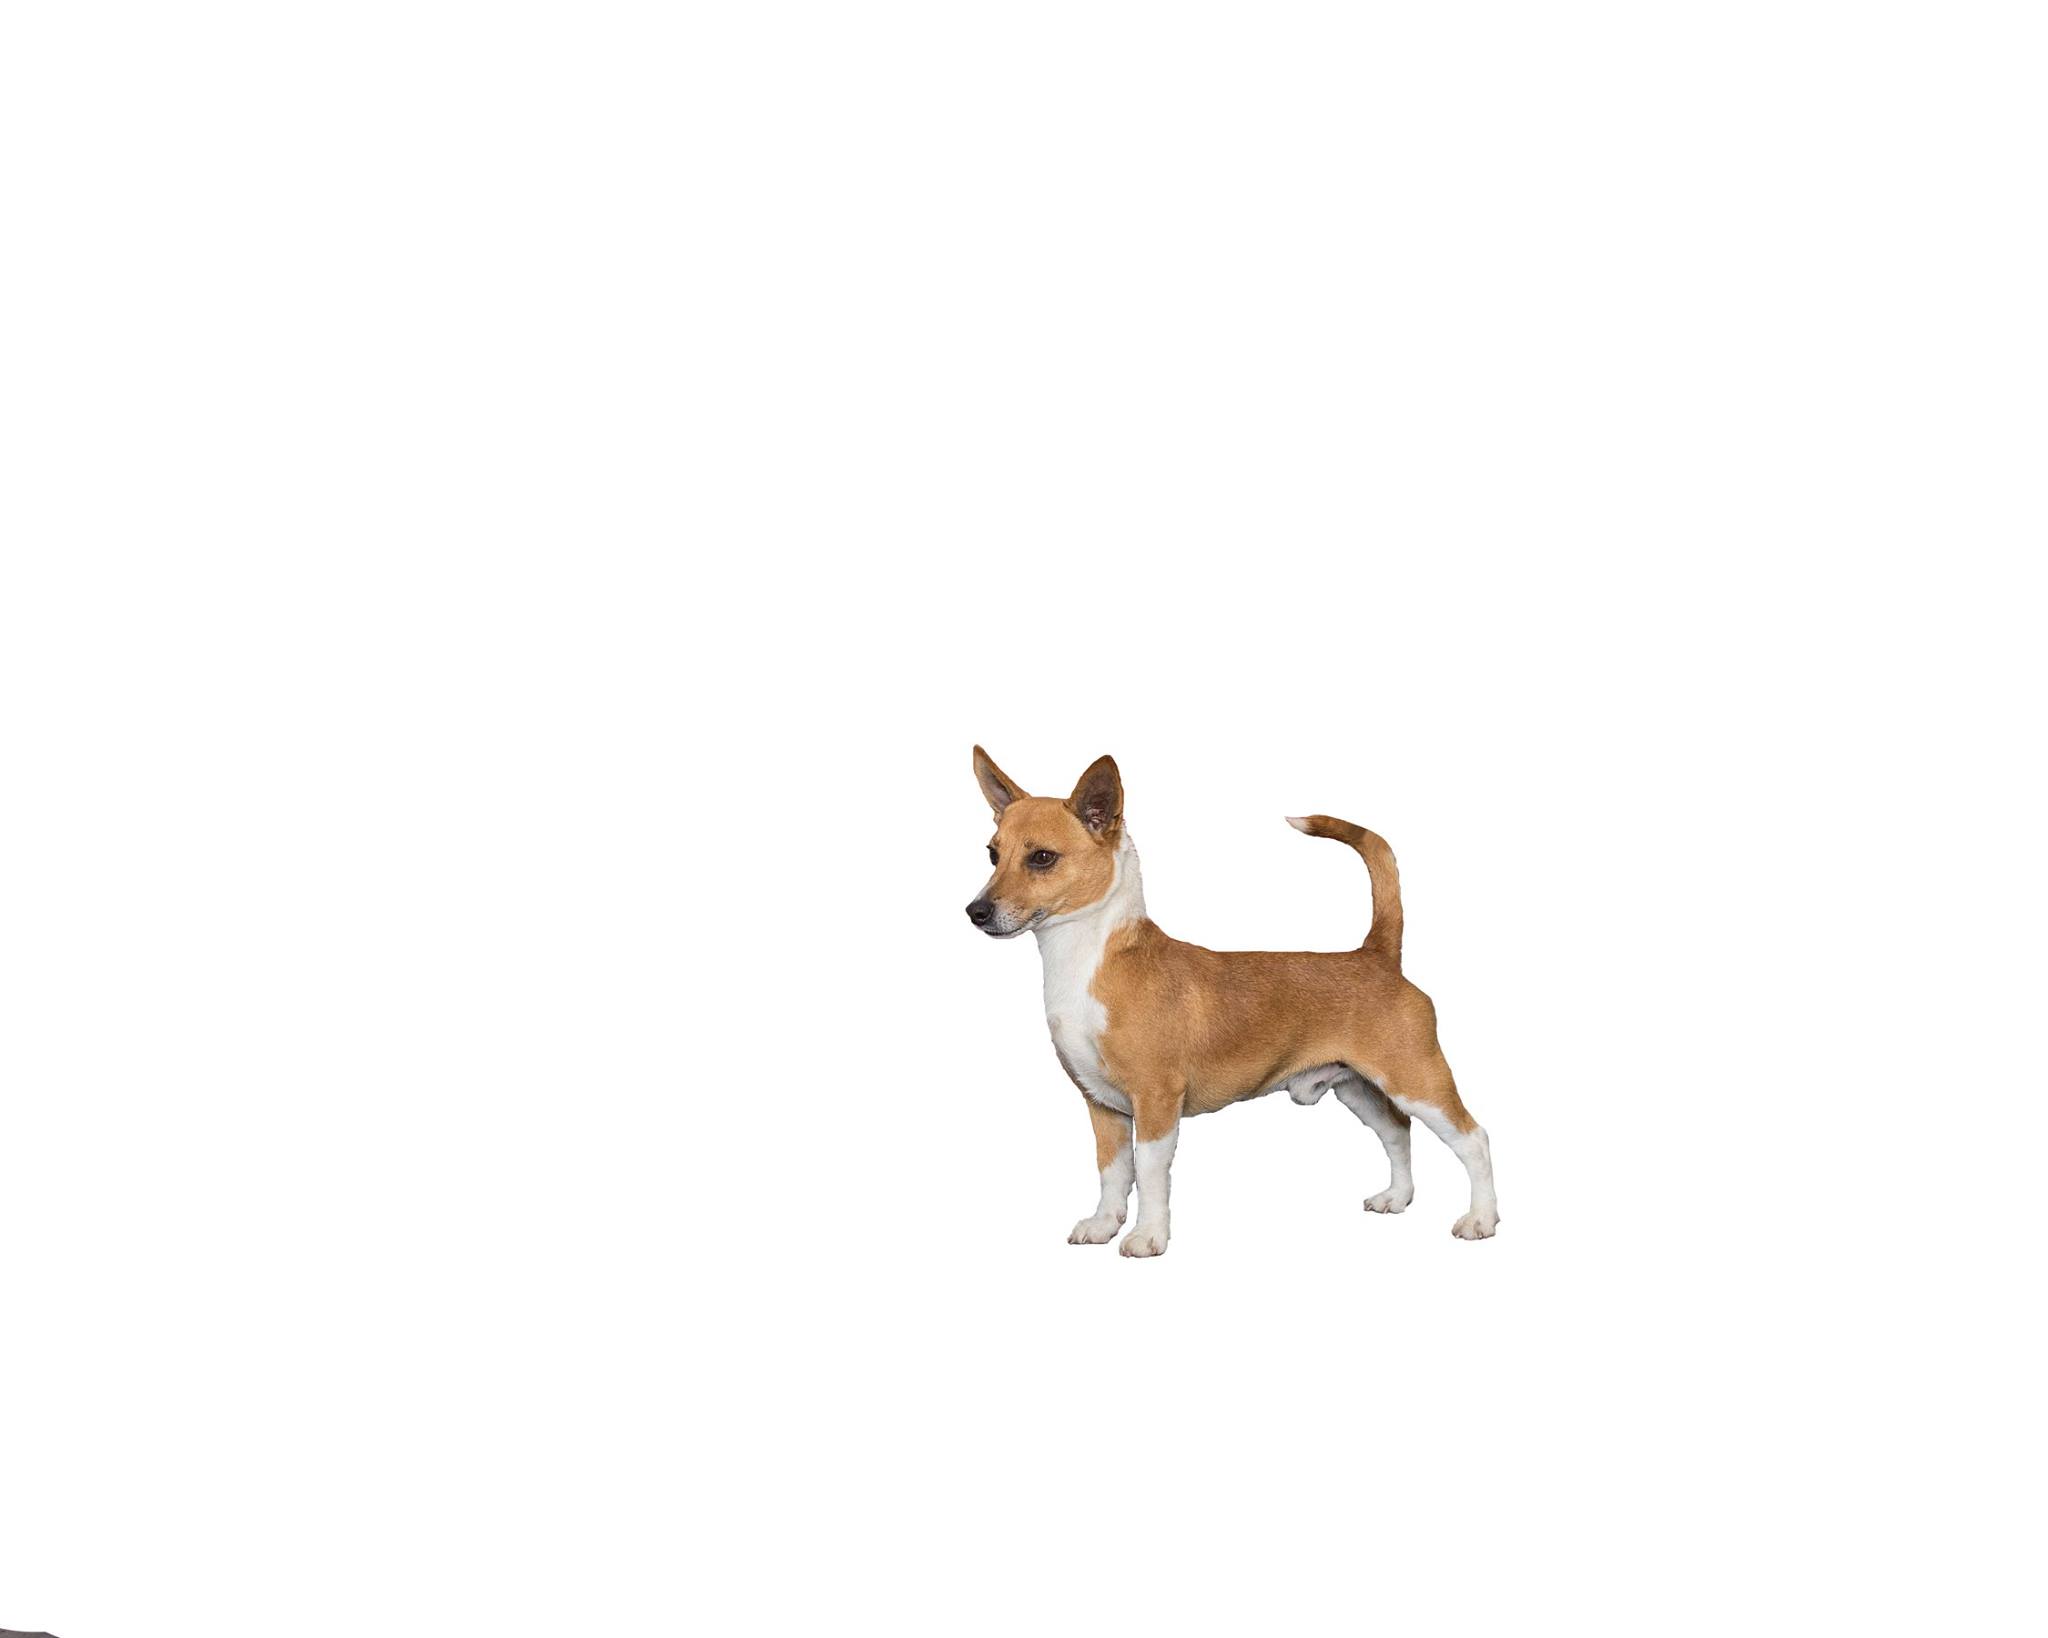 Top Hound - Top Dog Portuguese Podengo Pequeno David - Smooth Coat #Thisisakc